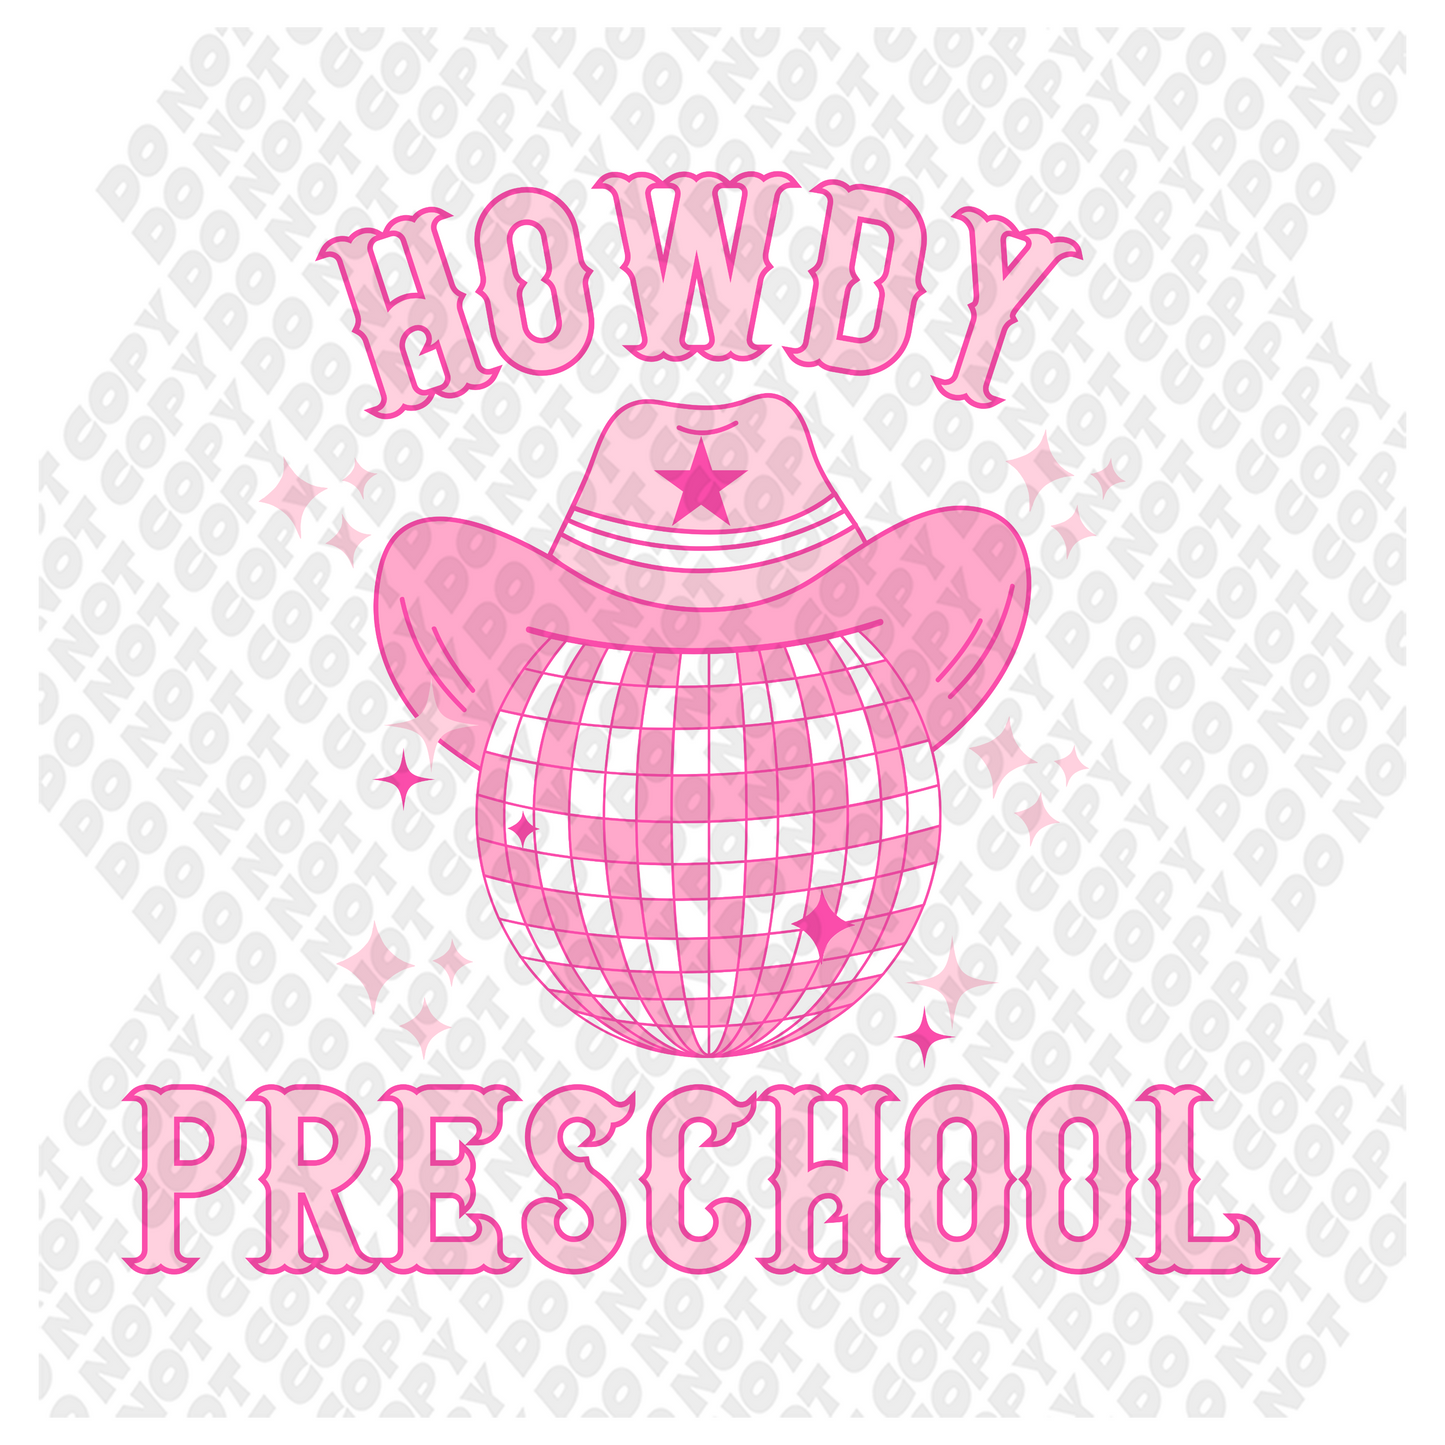 Howdy Disco Ball Preschool